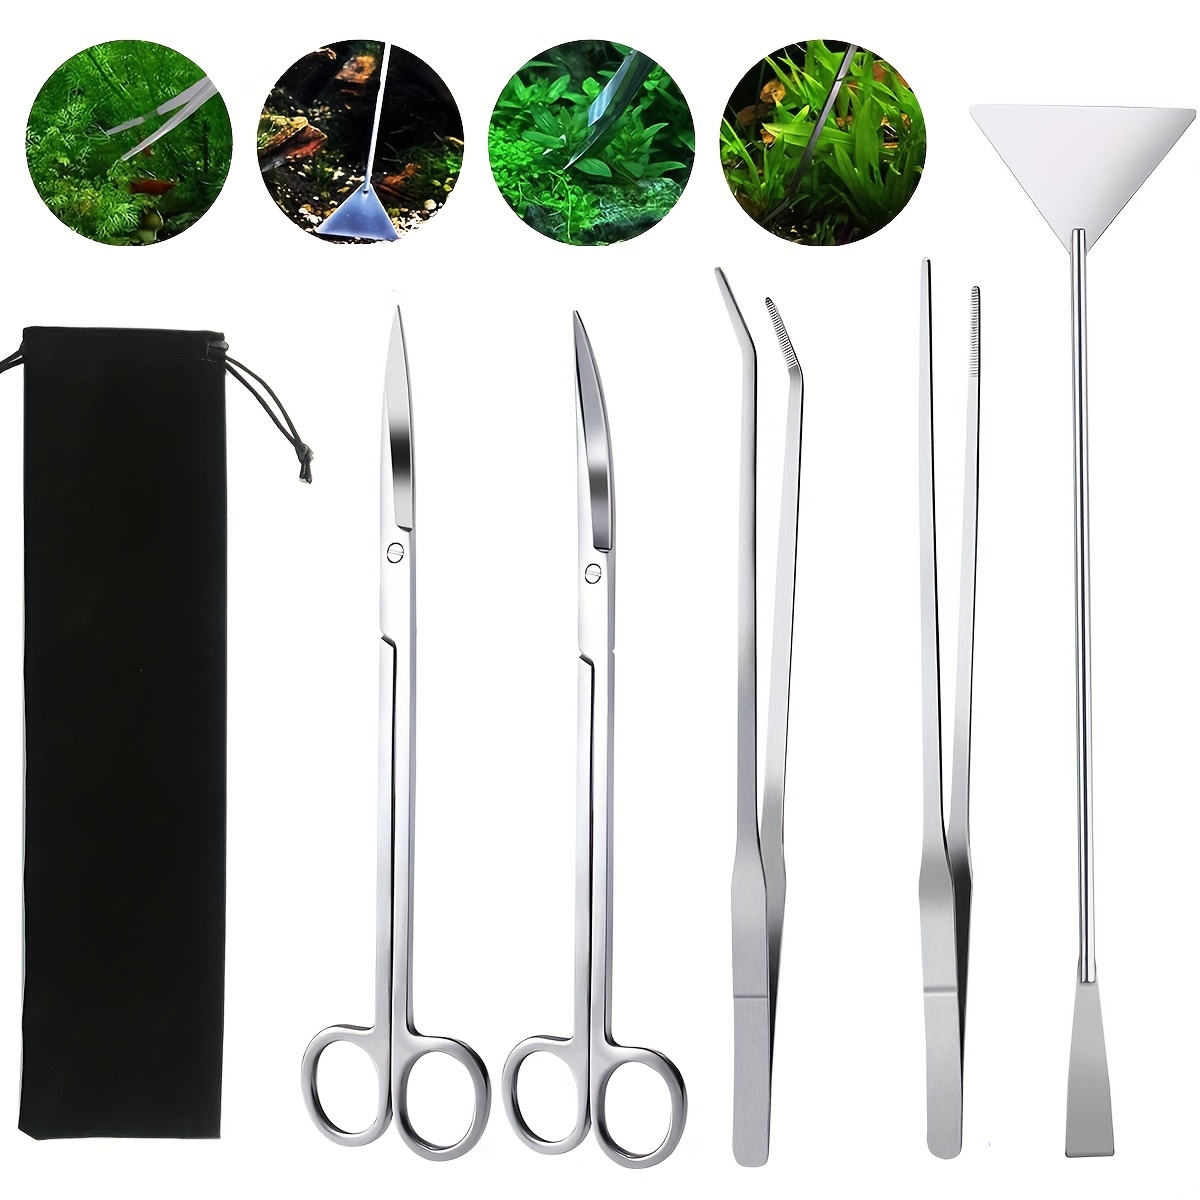 5-Piece Aquarium Tool Kit - Stainless Steel Tweezers, Scissors, & Spatula  for Cleaning Fish Tanks & Aquatic Plants